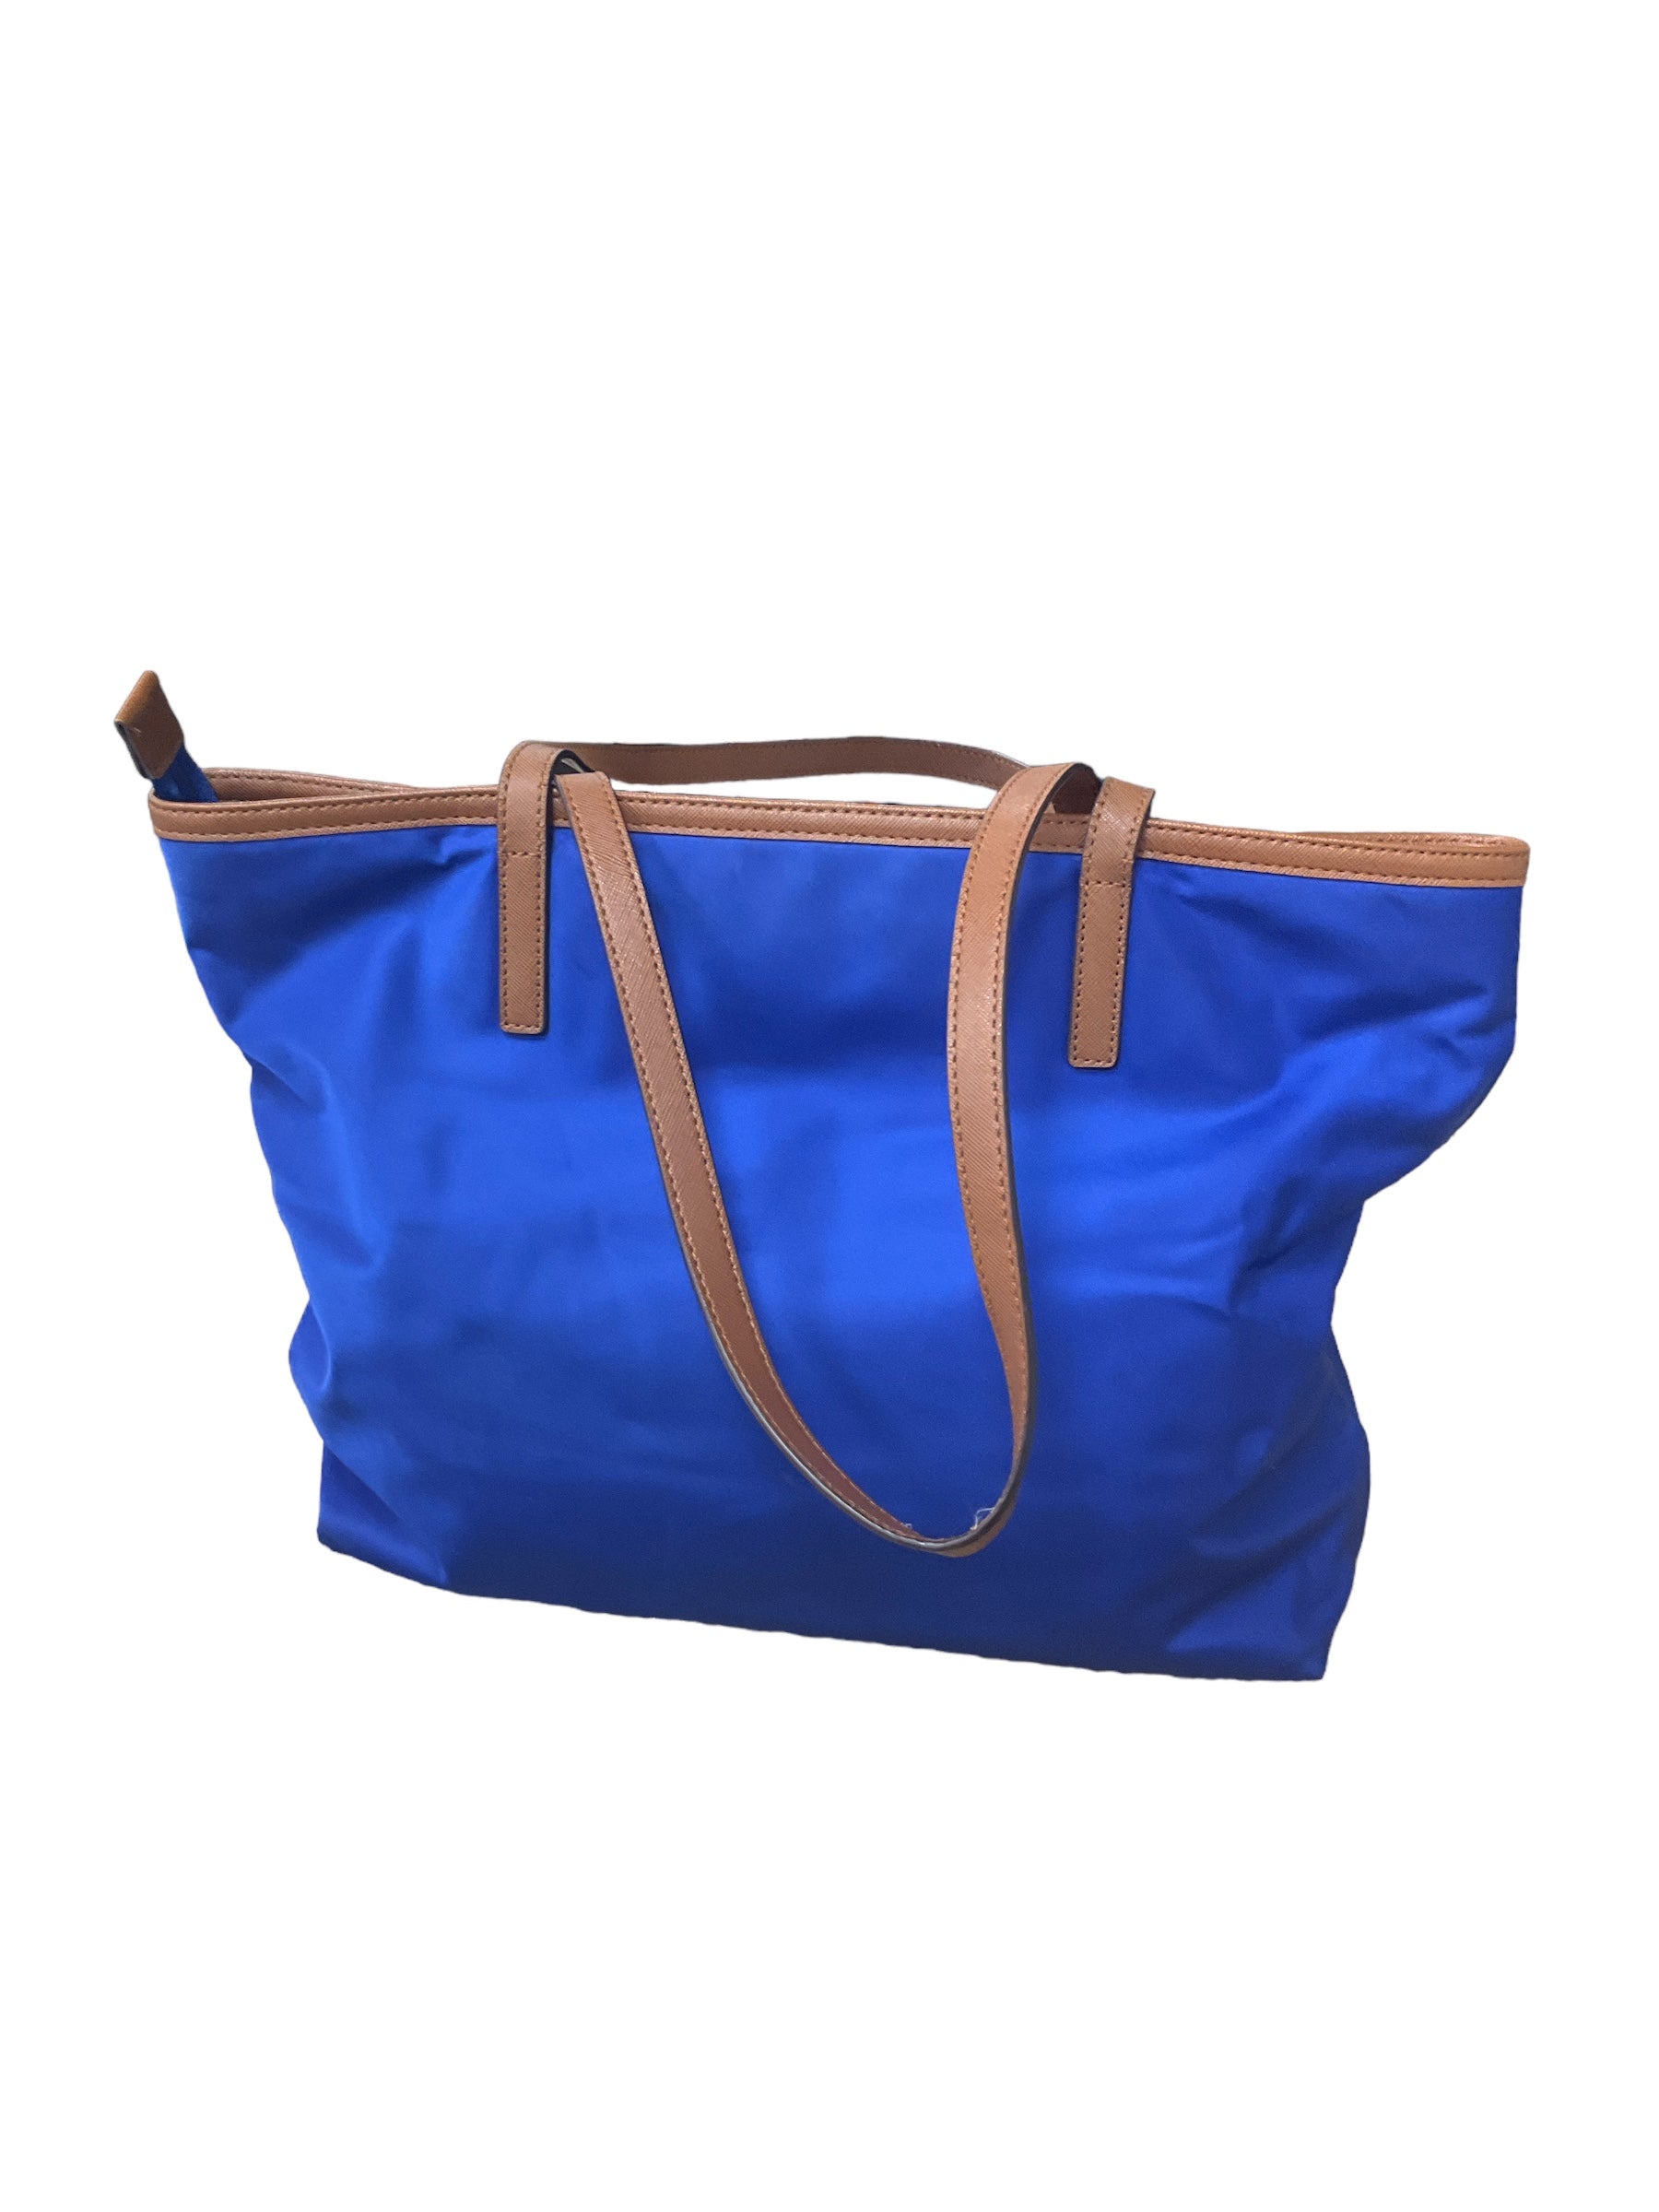 Michael Kors handbag as wallet in Royal Blue color : Amazon.in: Fashion